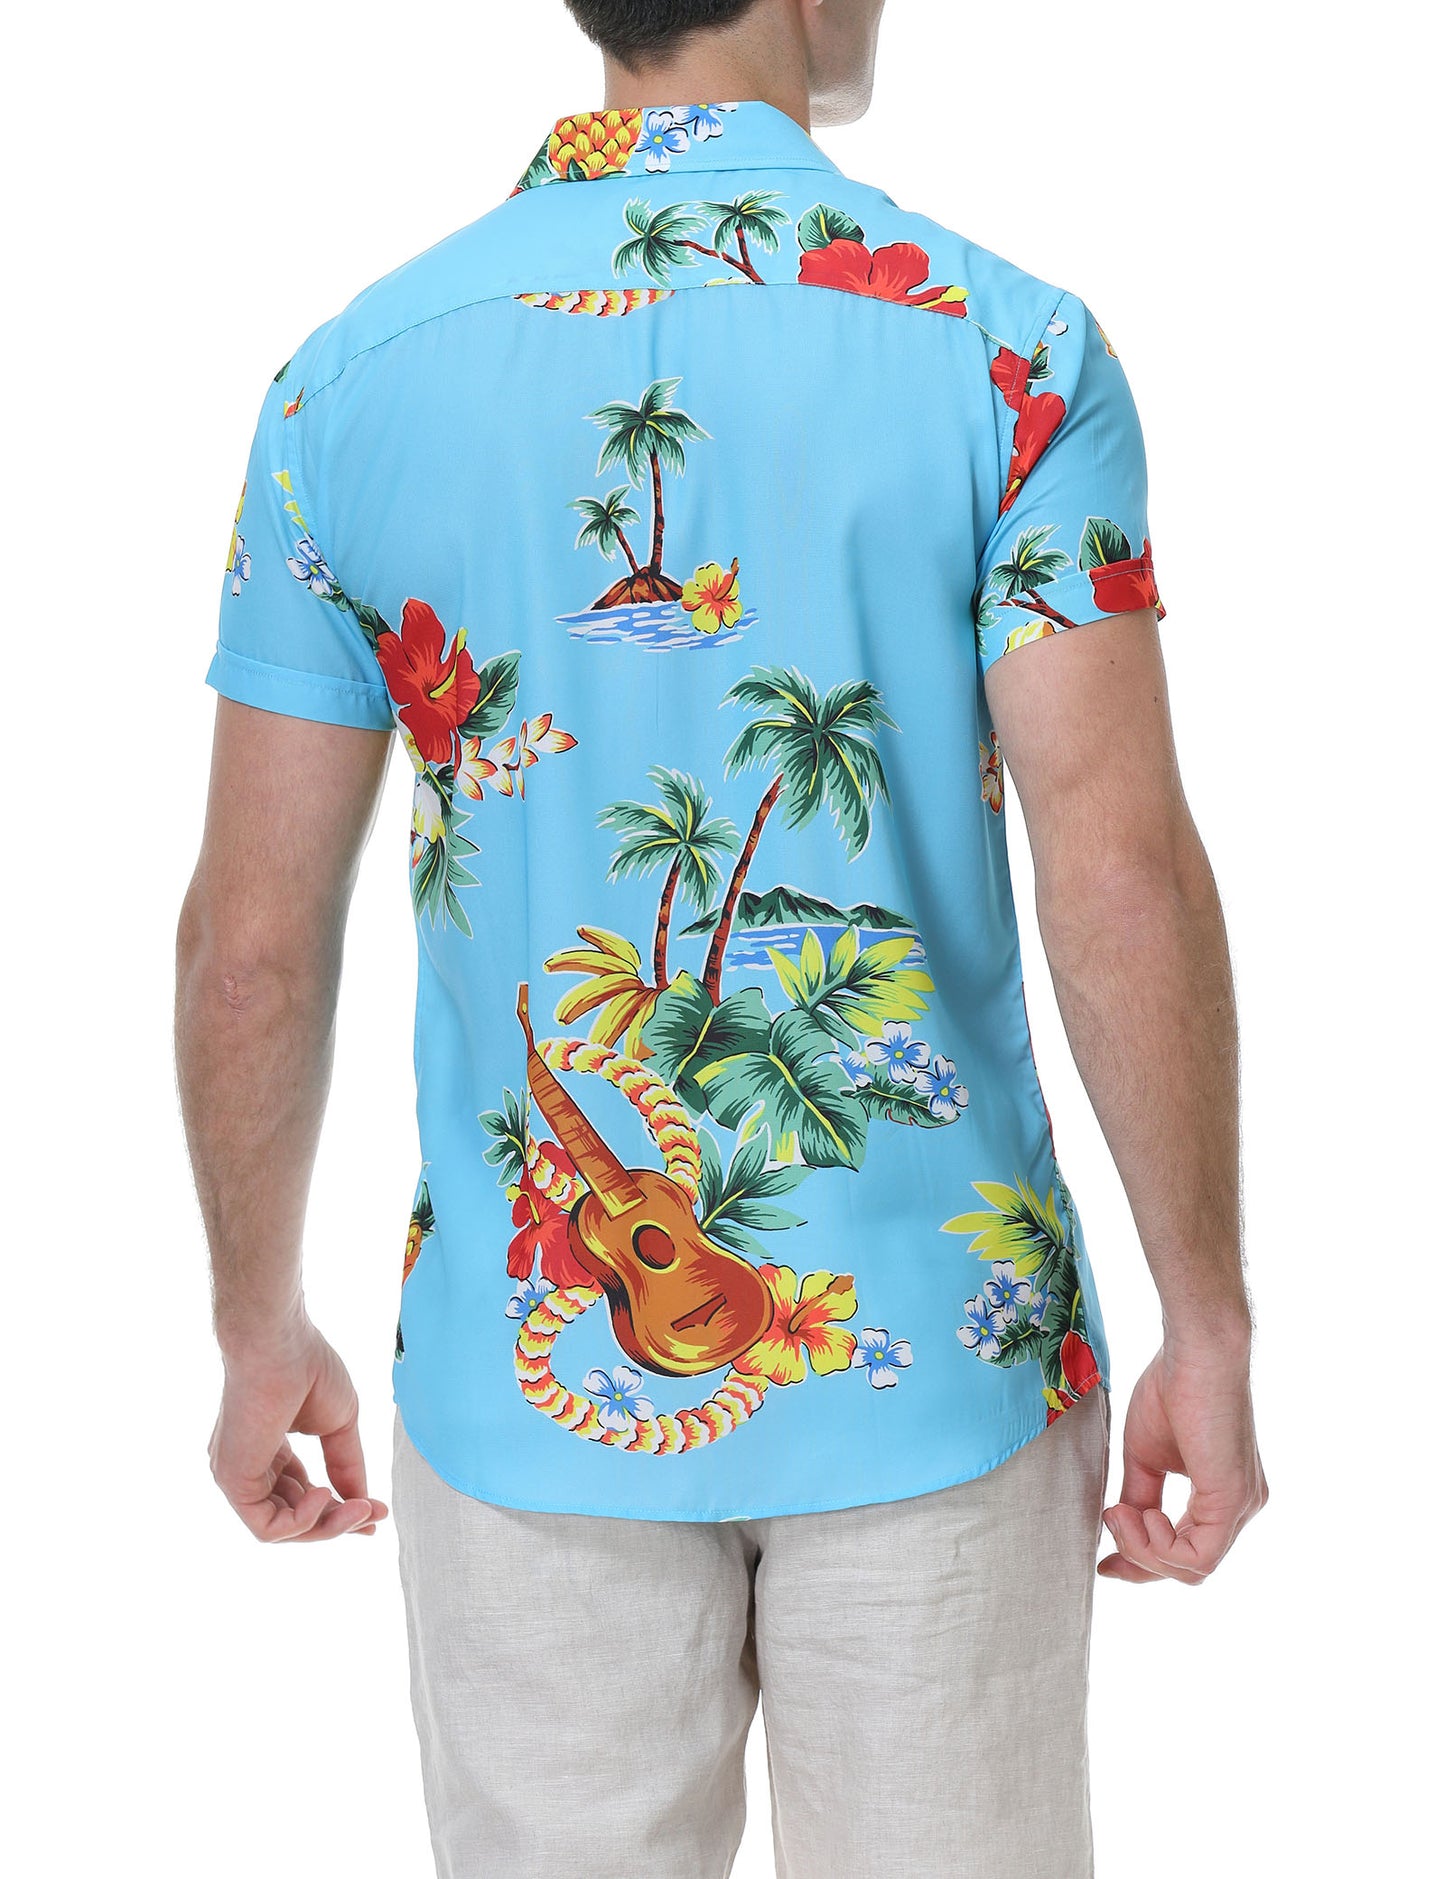 HOT Boston Celtics NBA Floral Tropical Beach Hawaiian Shirt